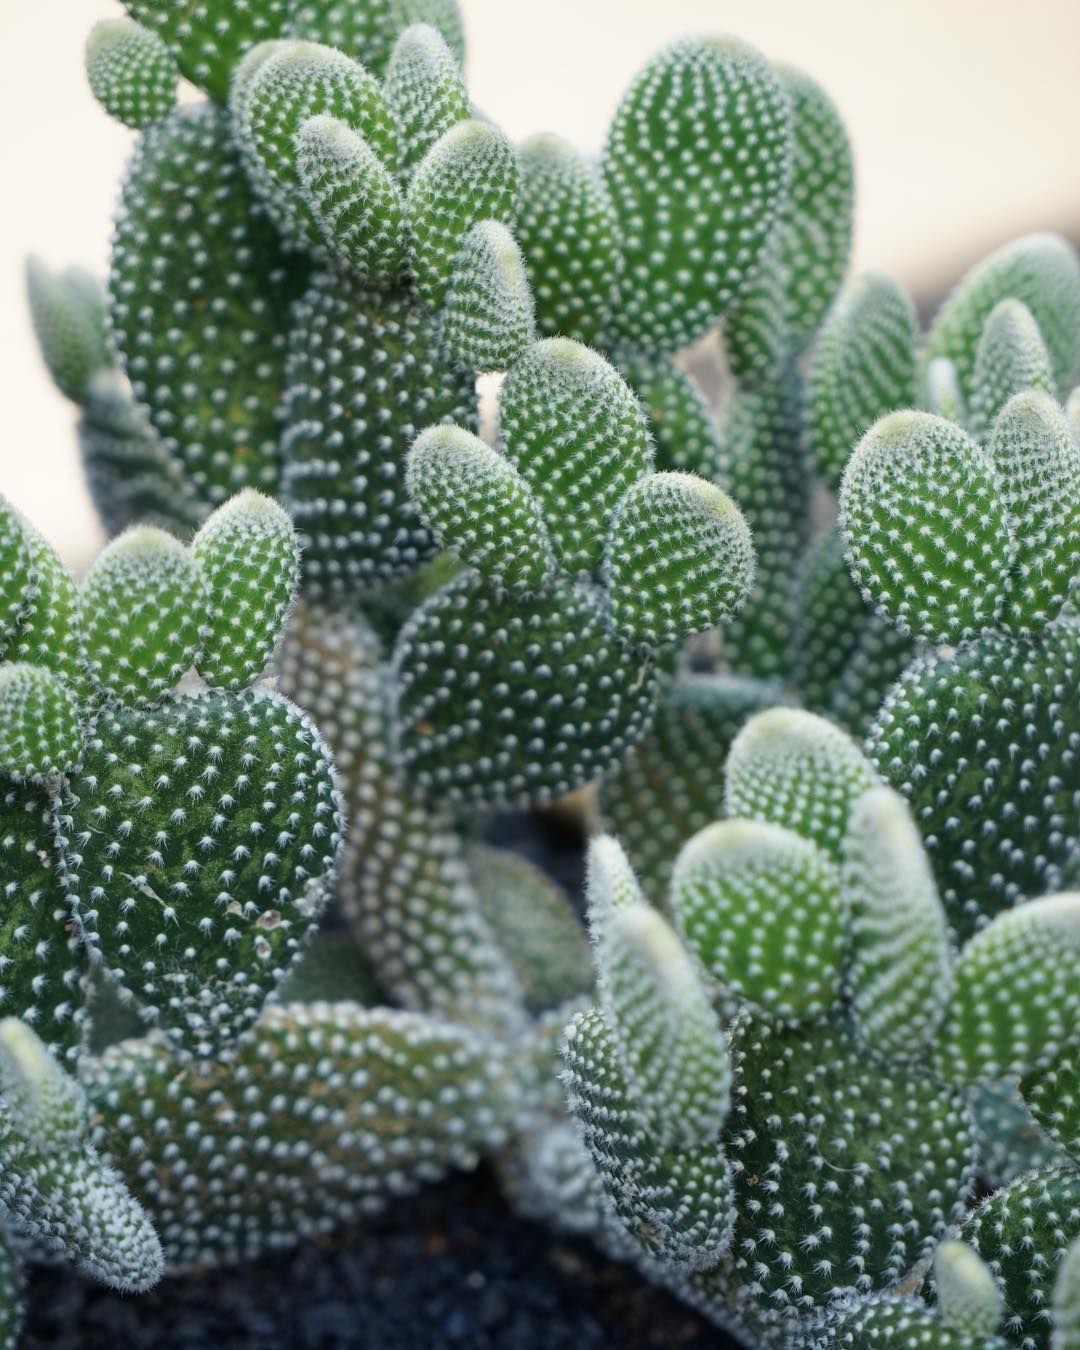 Cactus: Amazing uses and benefits